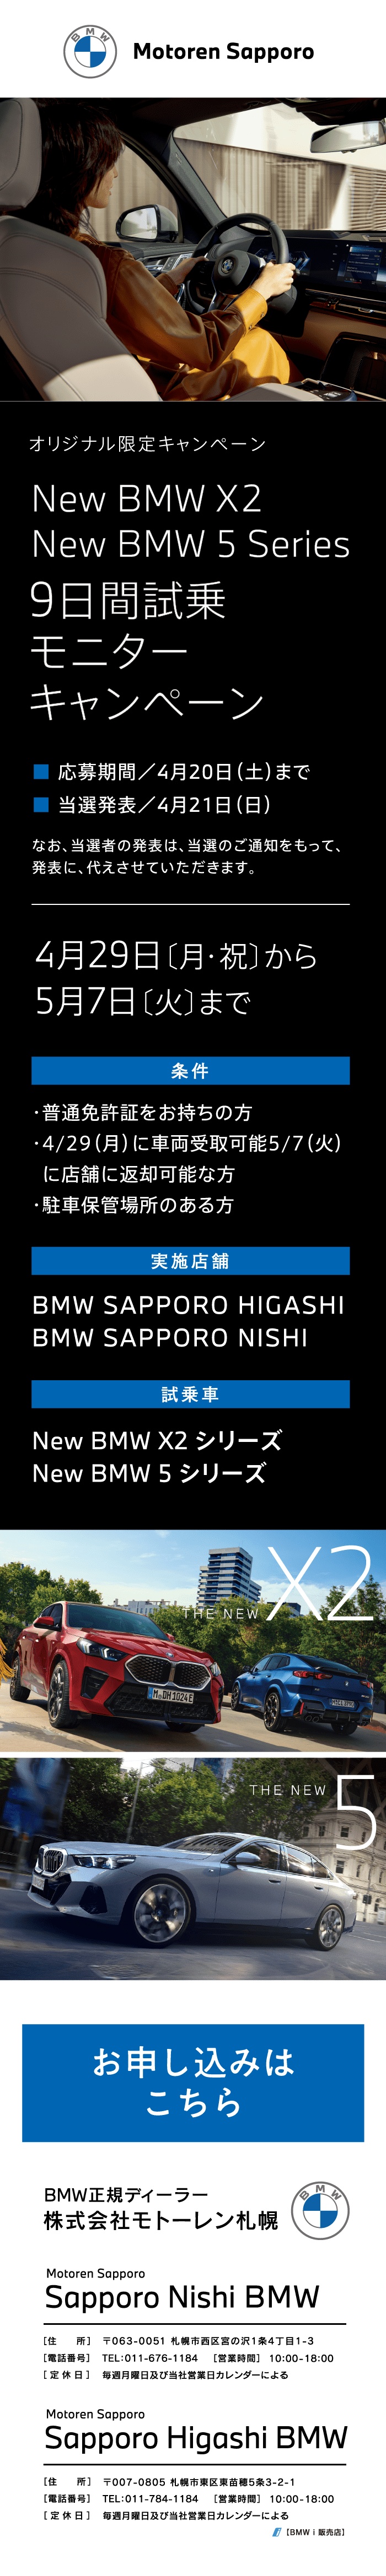 New BMW X2・New BMW 5 Series 9日間試乗モニターキャンペーン